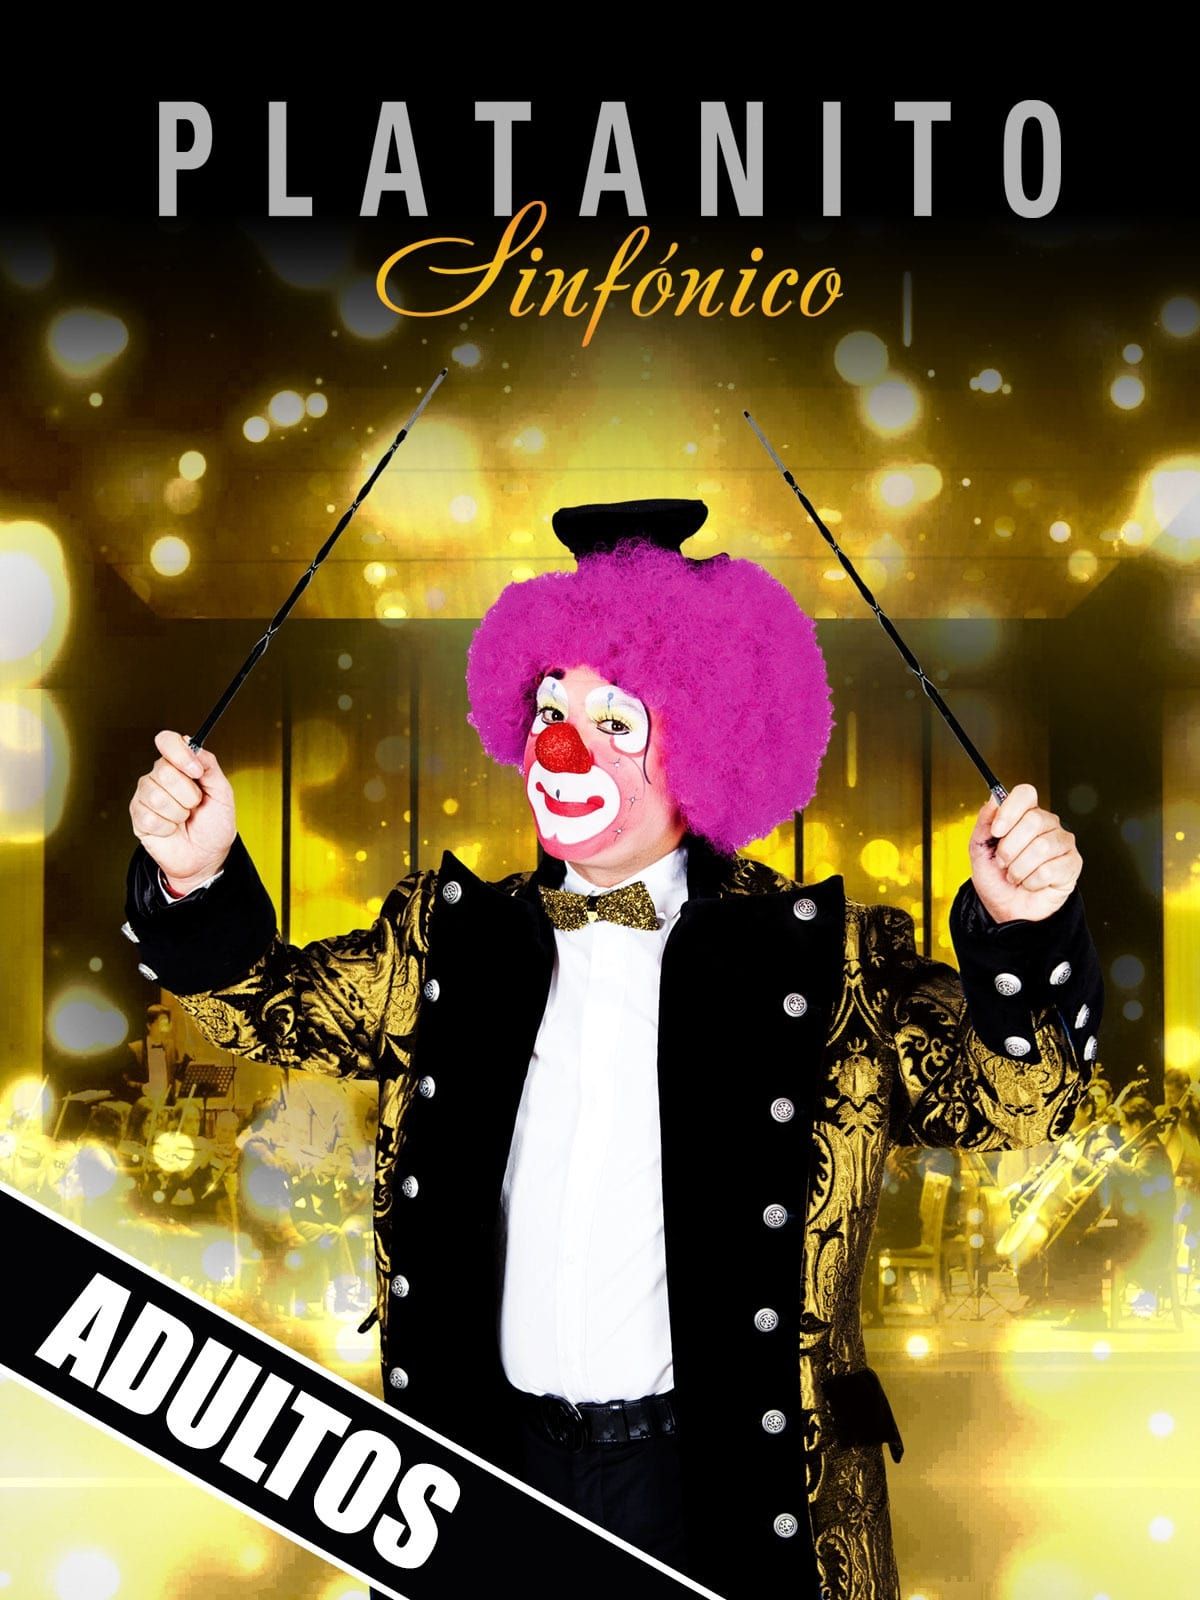  Los Verduleros [DVD] : Anglica Chan, Luis de Alba, Rossy  Mendoza, Tun Tun, Alfonso Zayas, Pedro Infante, Jr., Pedro Infante, Sr.:  Movies & TV